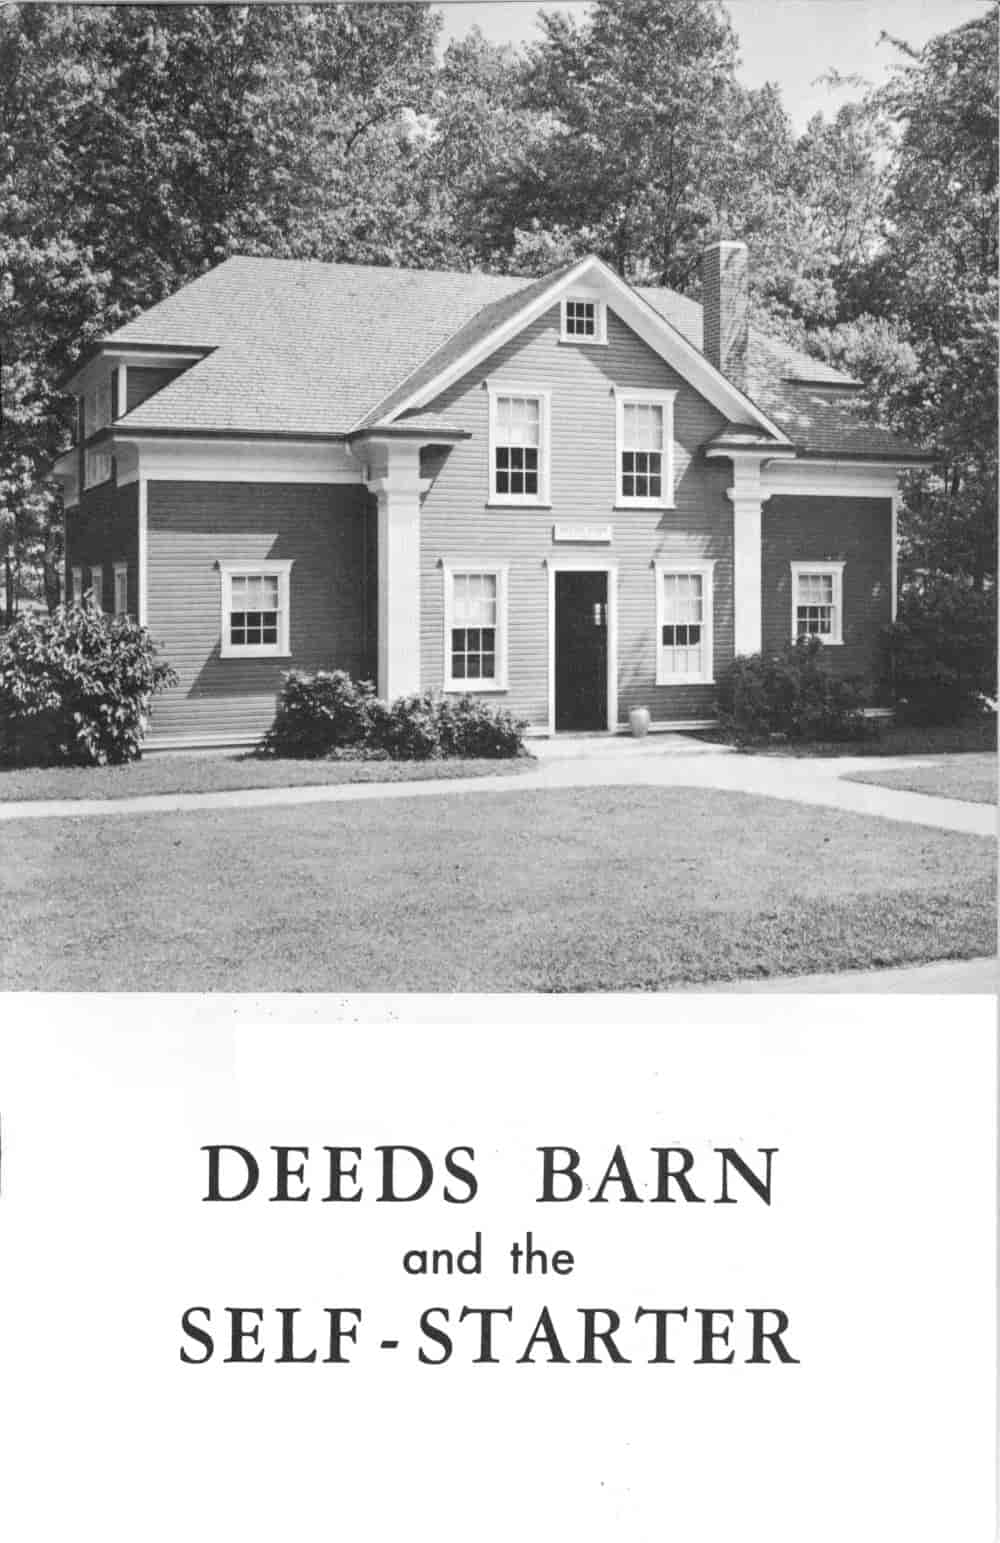 Deeds Barn and the Self-Starter